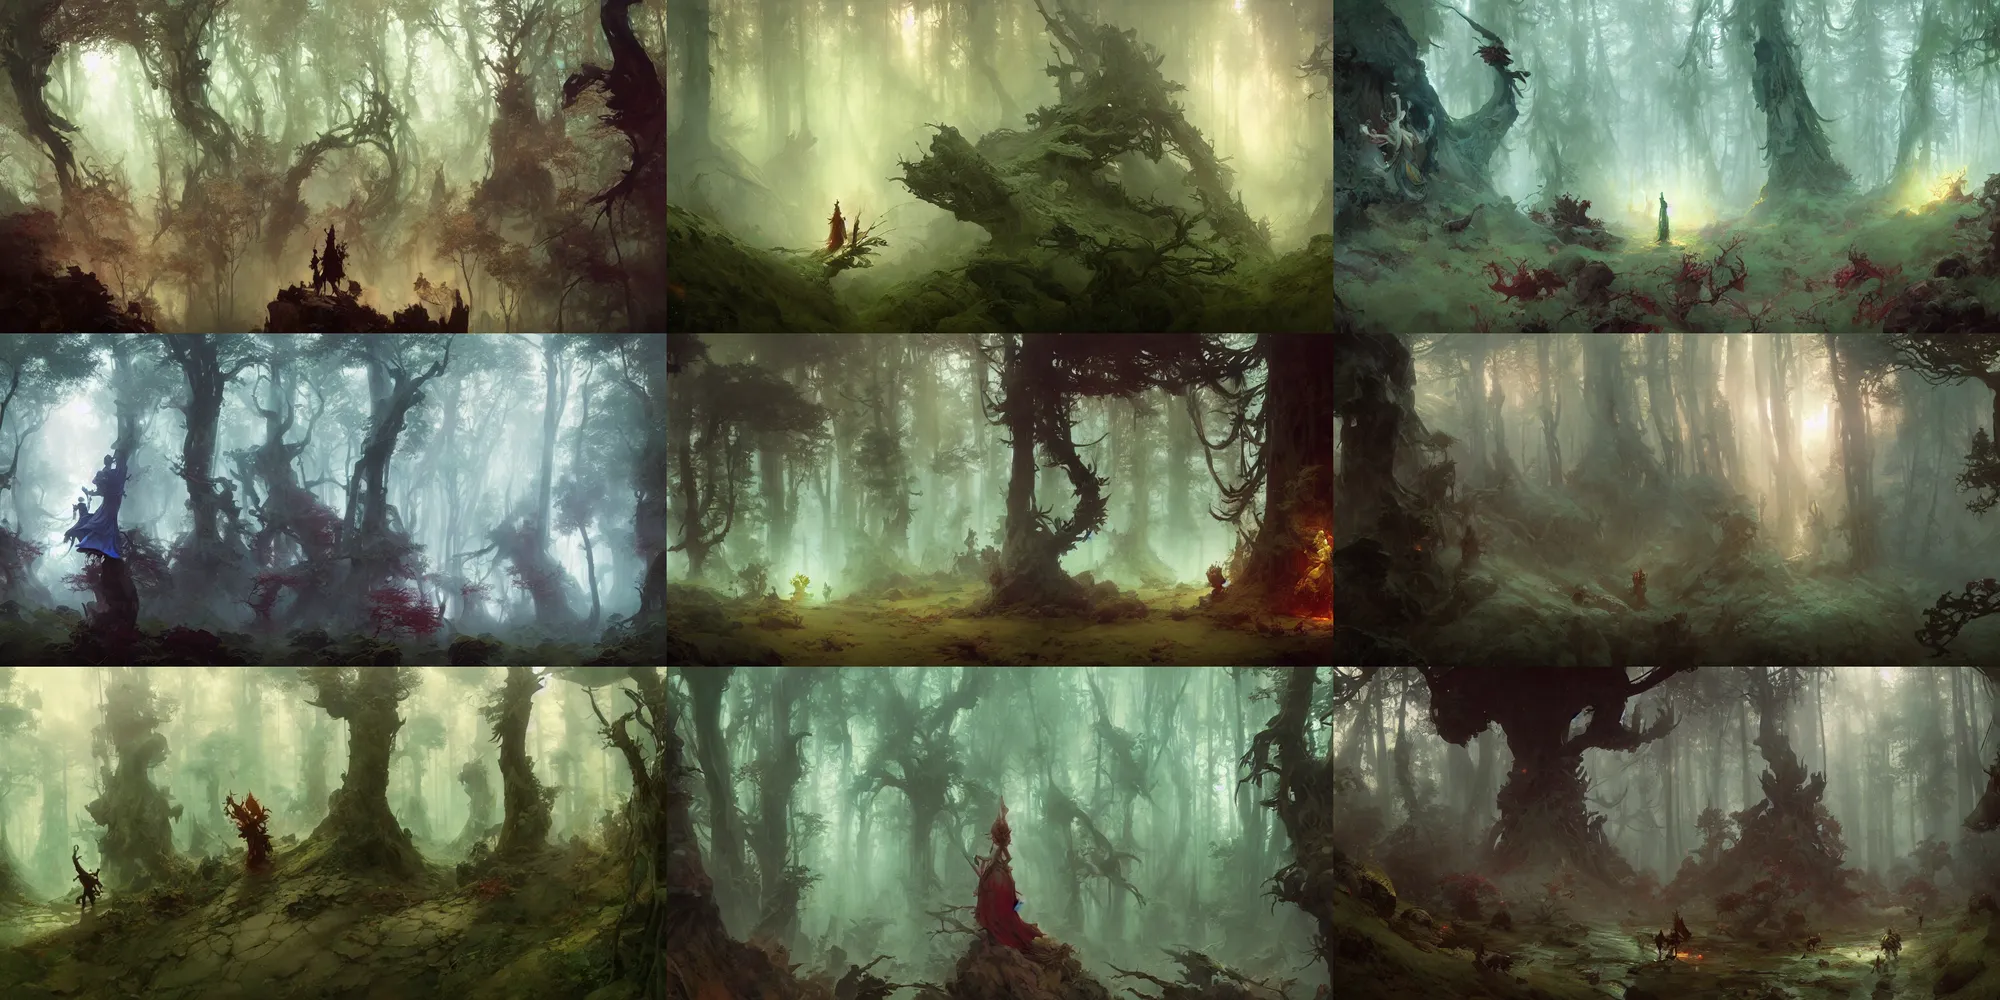 Prompt: mythical forest, fantasy, art by craig mullins, peter mohrbacher, ruan jia, reza afshar, ivan aivazovsky, marc simonetti, victo ngai, alphonse mucha